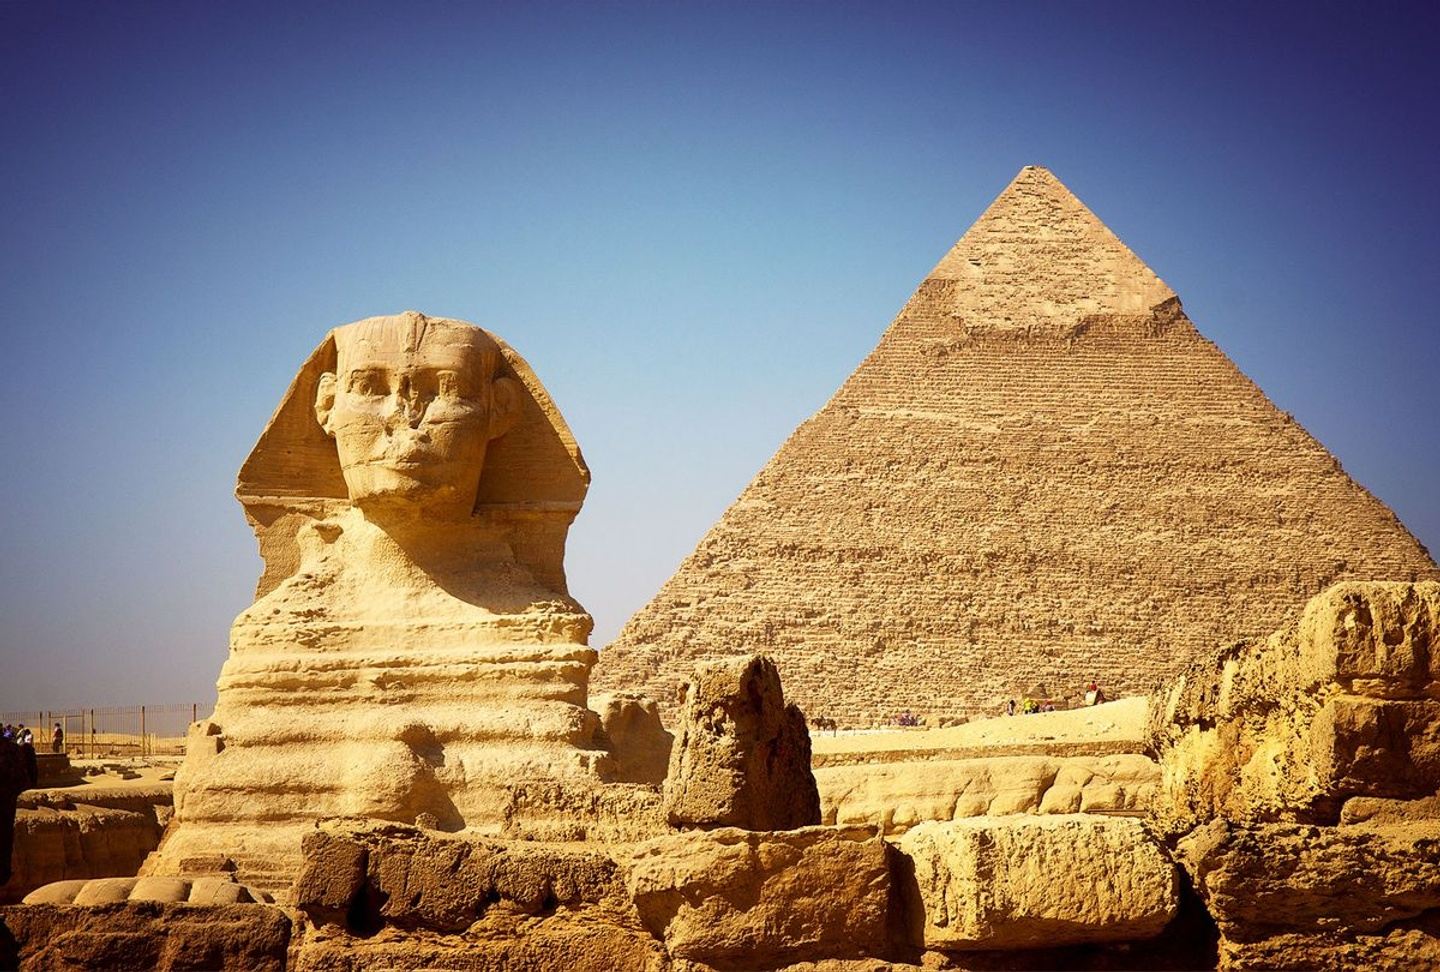 Explore Egypt